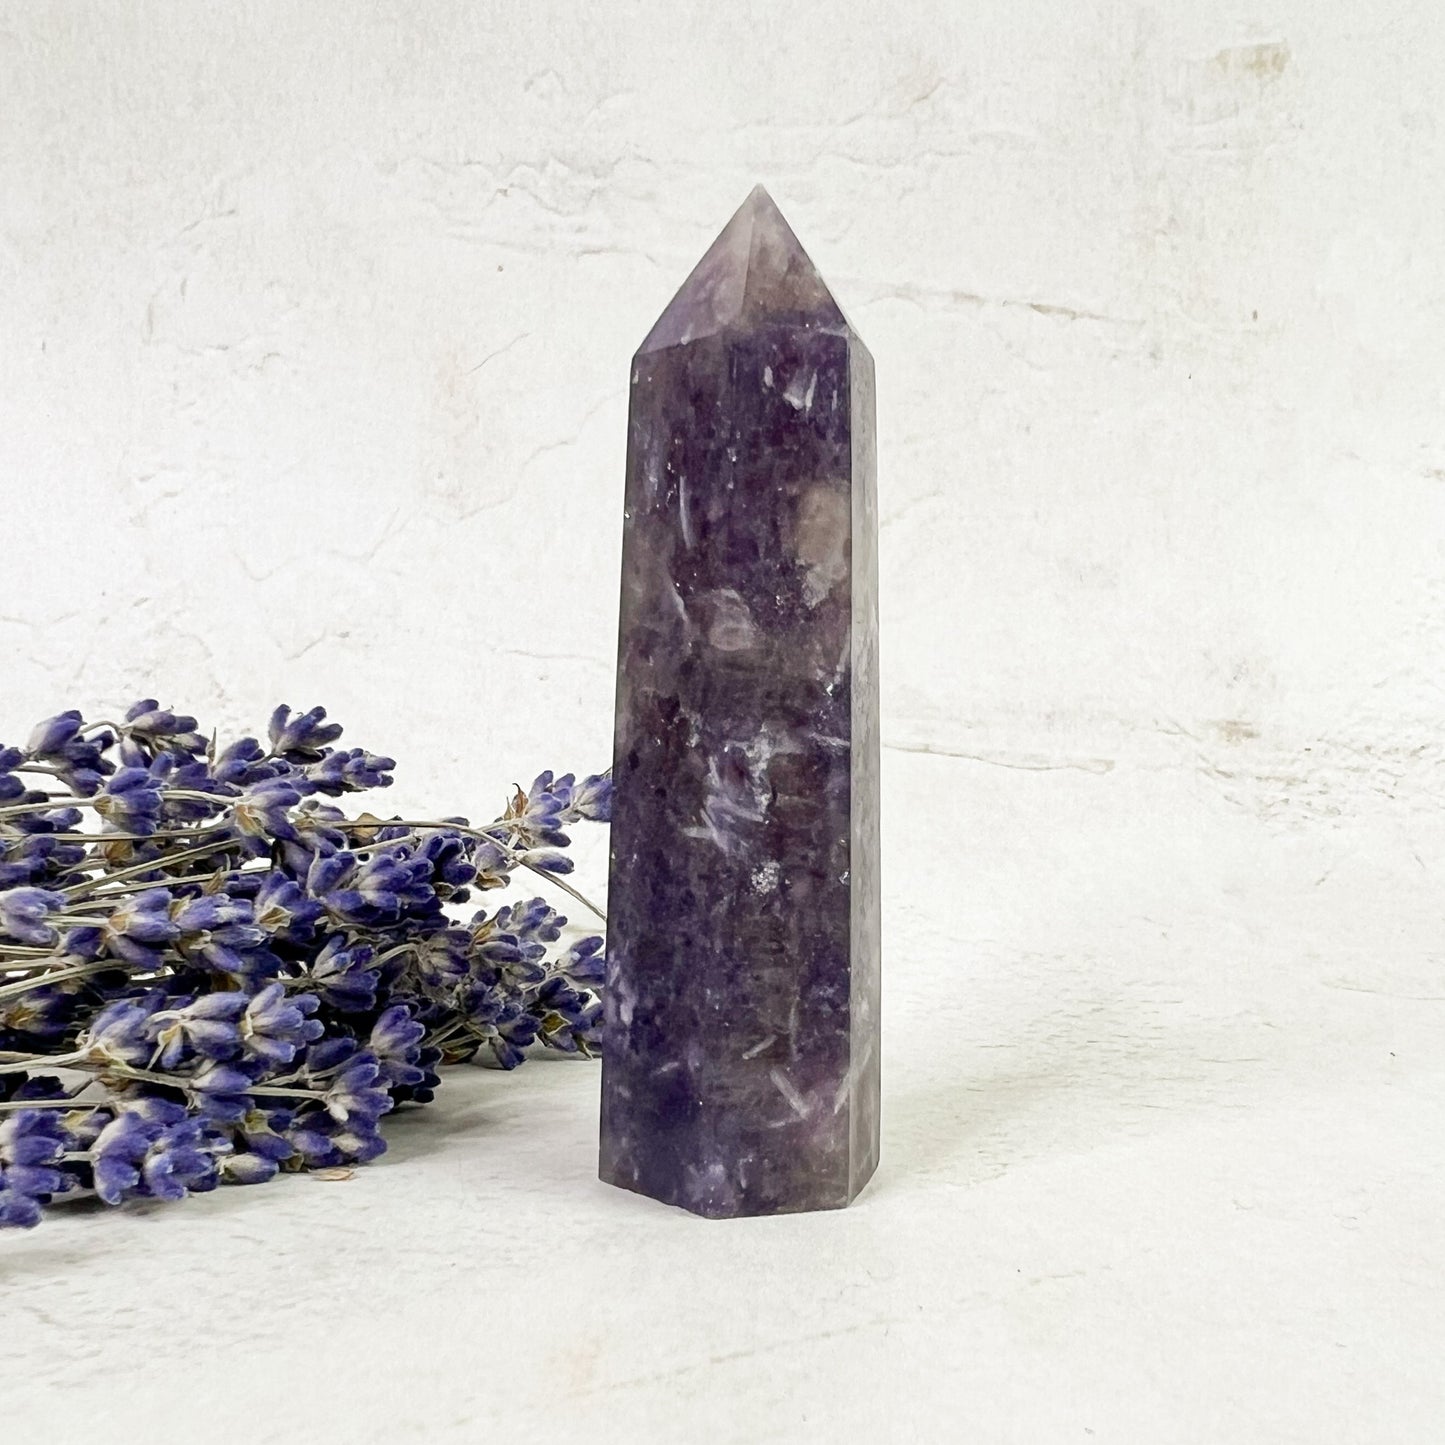 Unicorn Stone Crystal Tower - Joyful & Peaceful Crystal - Stabilizing, Balancing